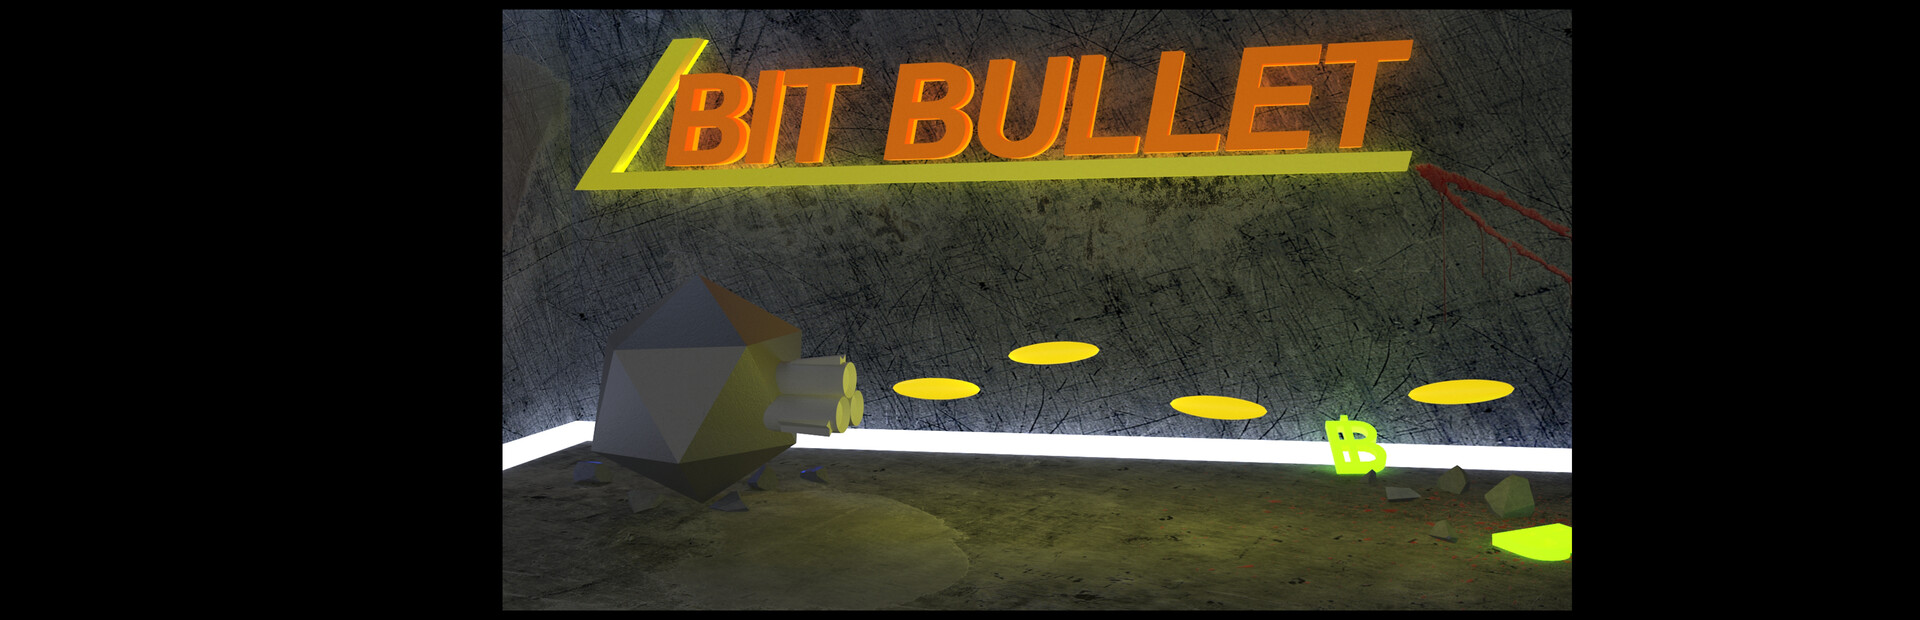 Bit Bullet cover image